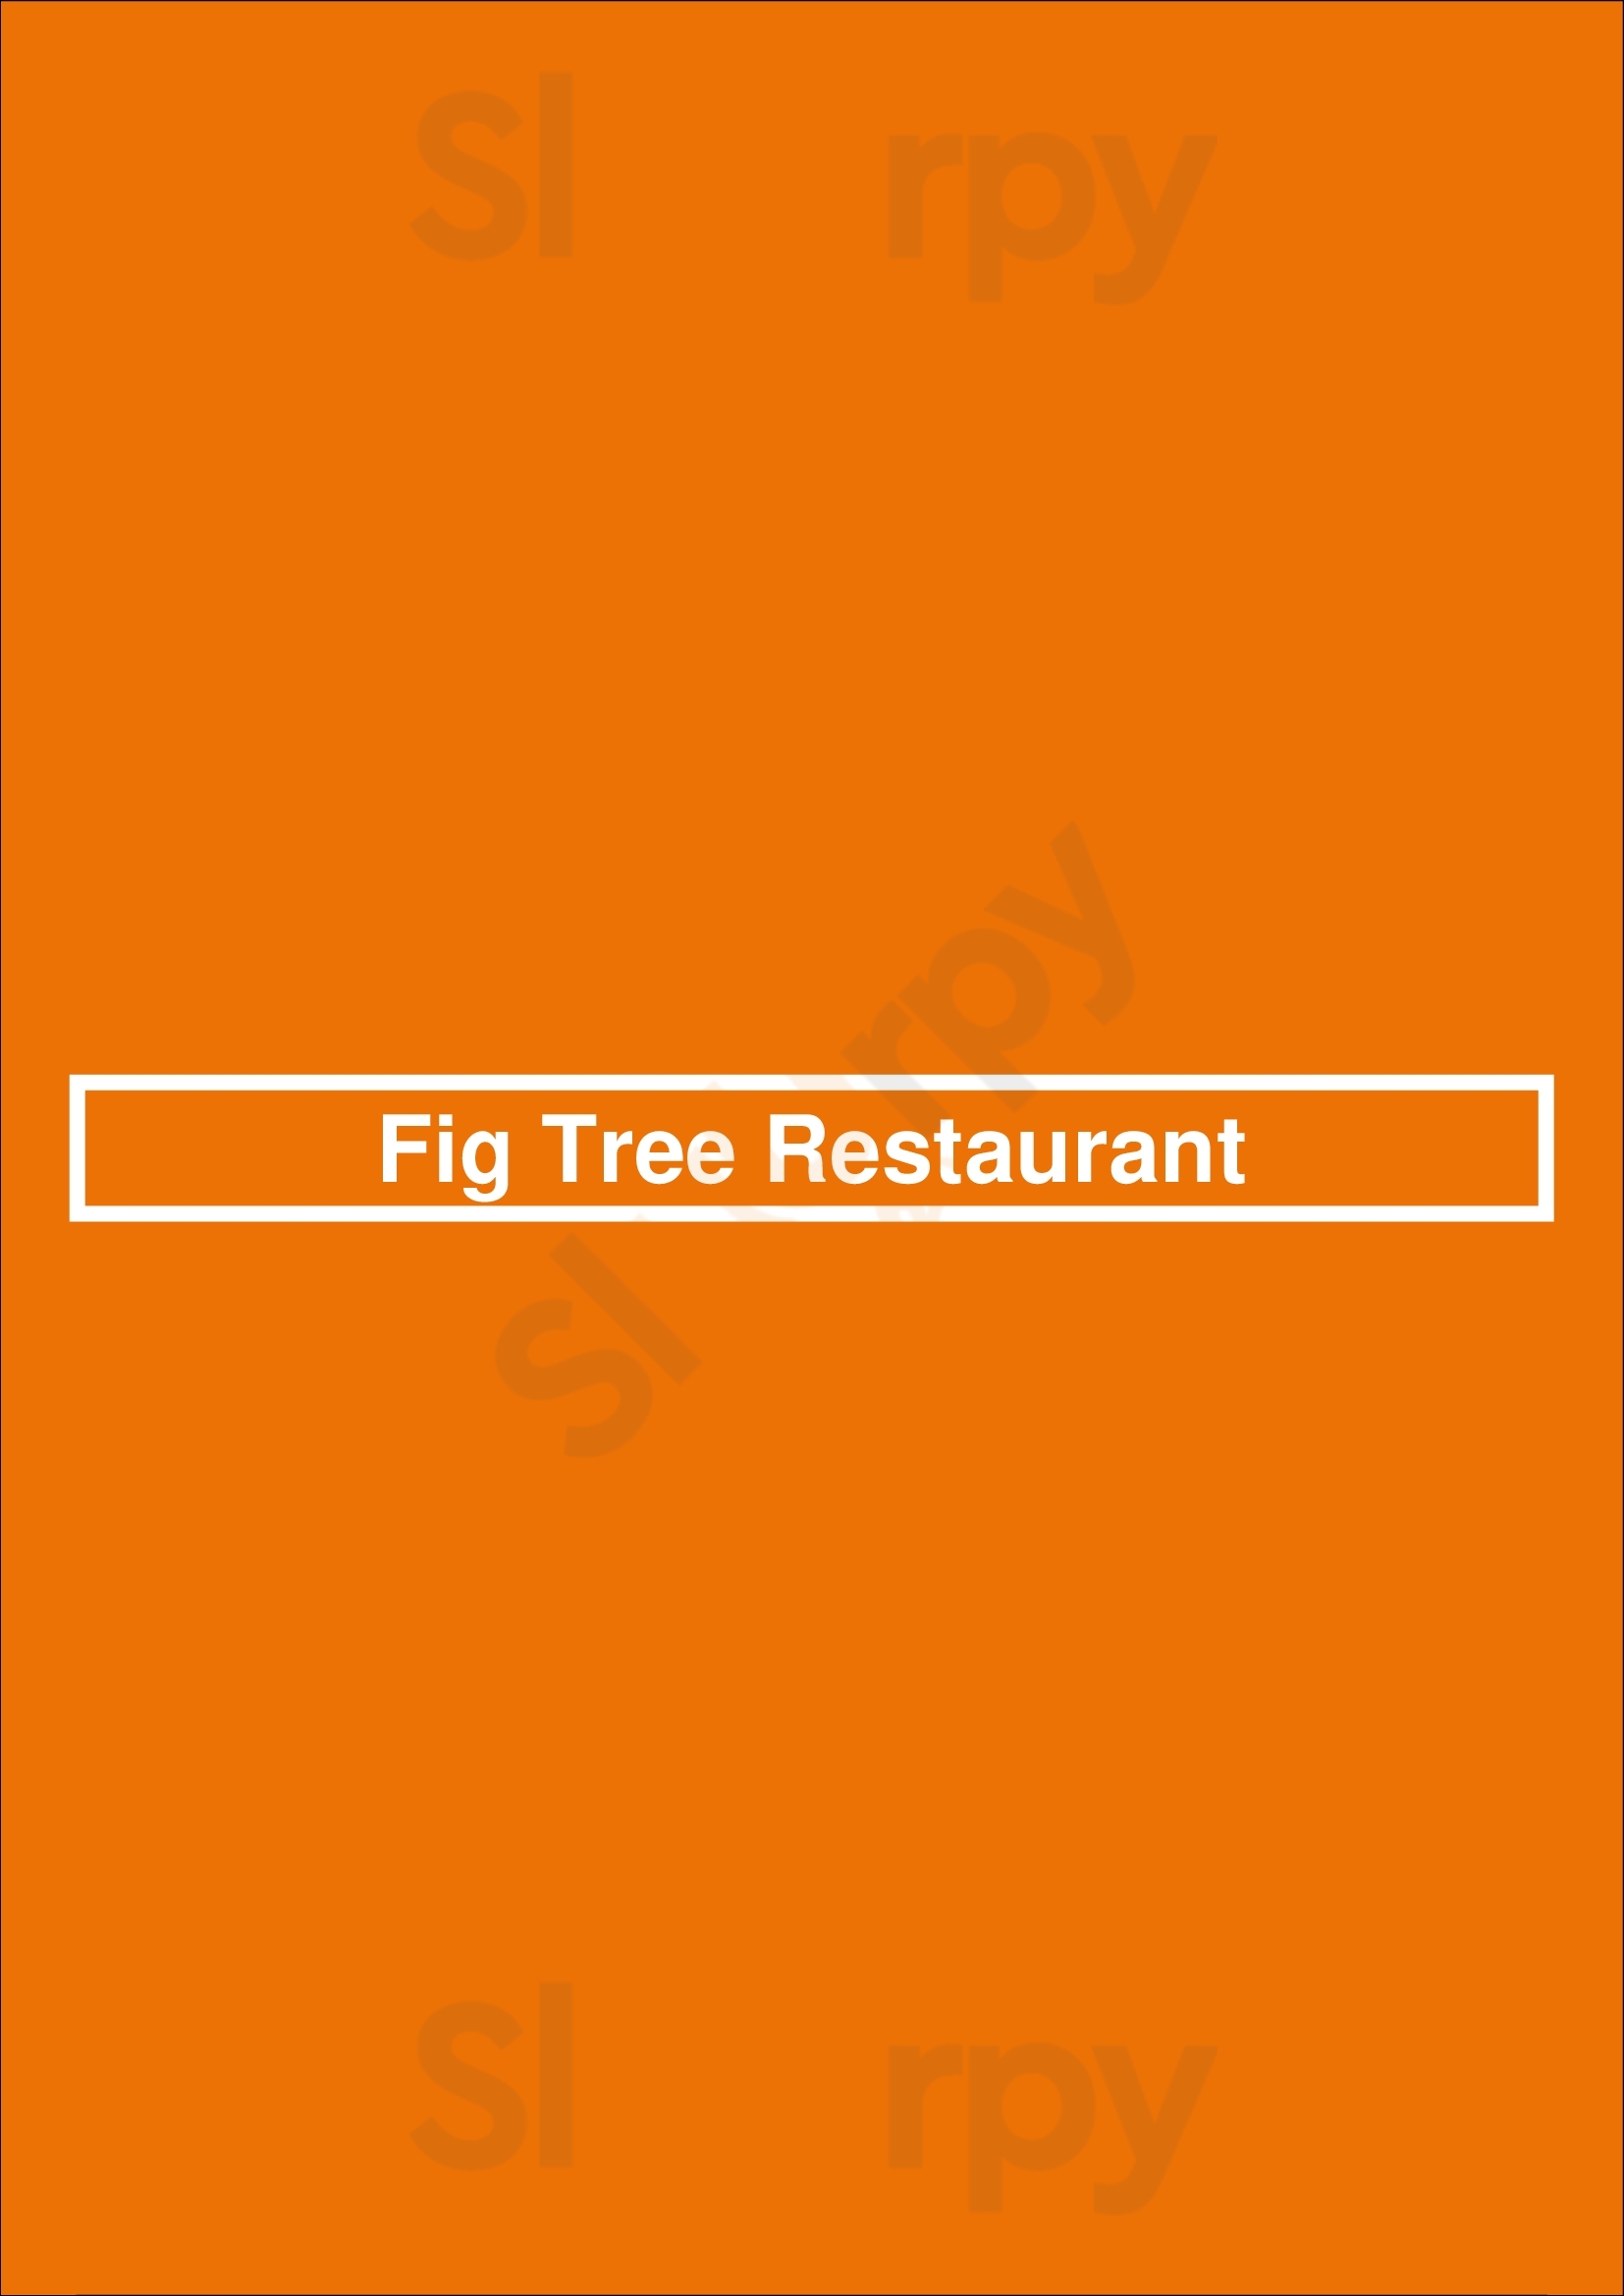 Fig Tree Restaurant San Antonio Menu - 1